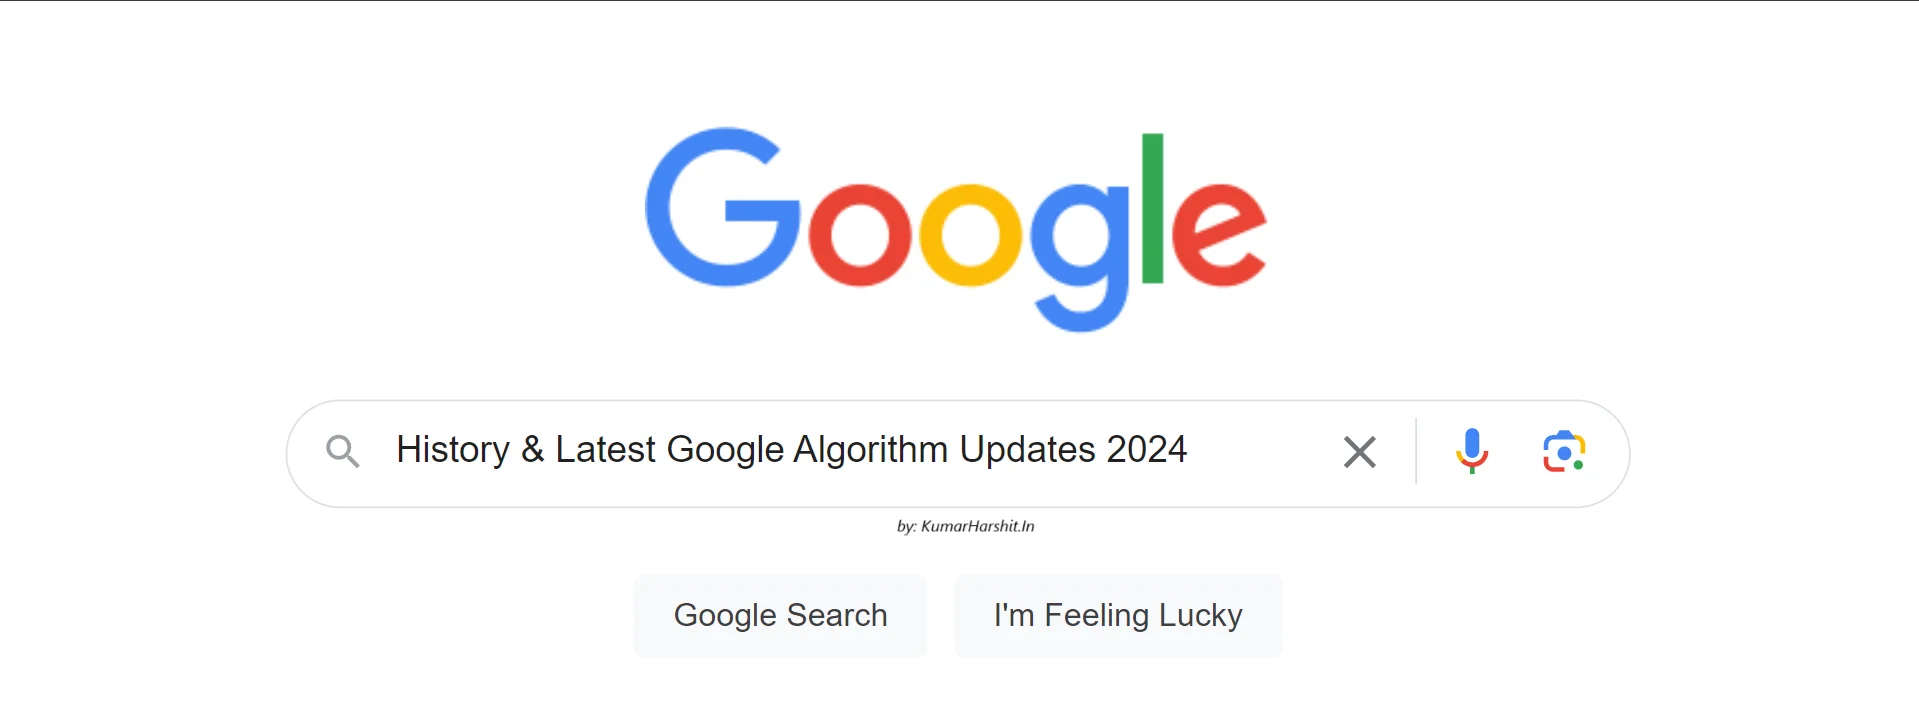 History & Latest Google Algorithm Updates 2024